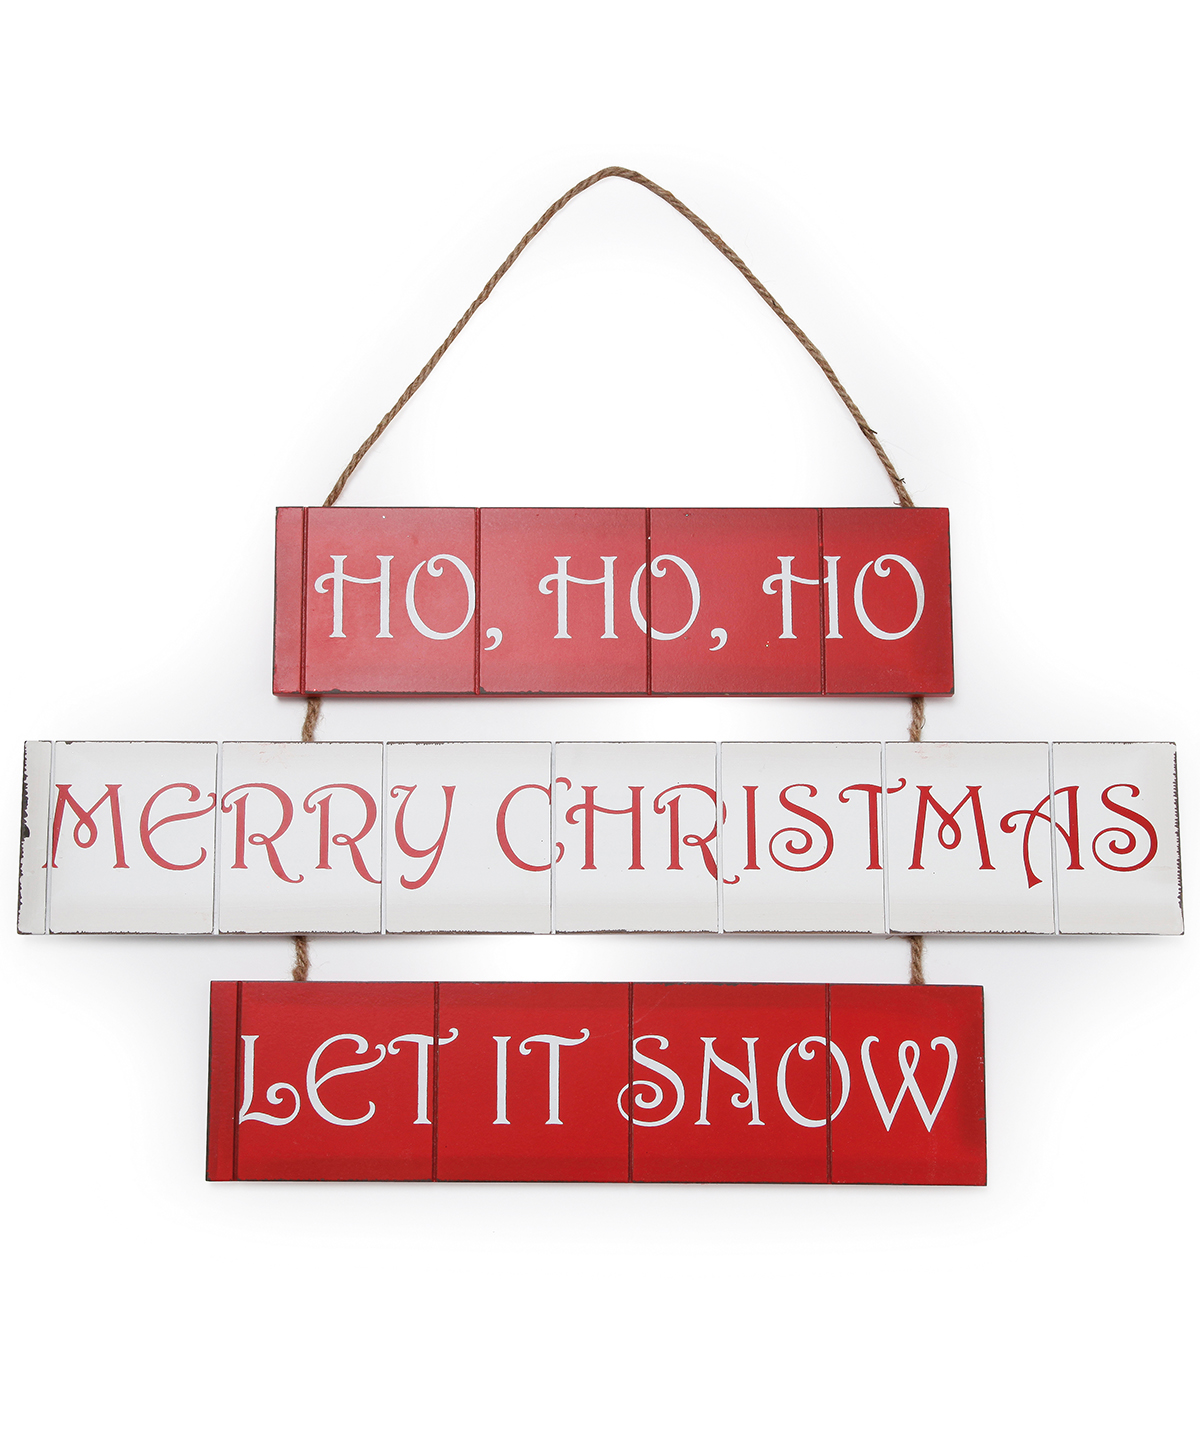 Ho ho ho/Merry Christmas/Let it snow triple hanging sign